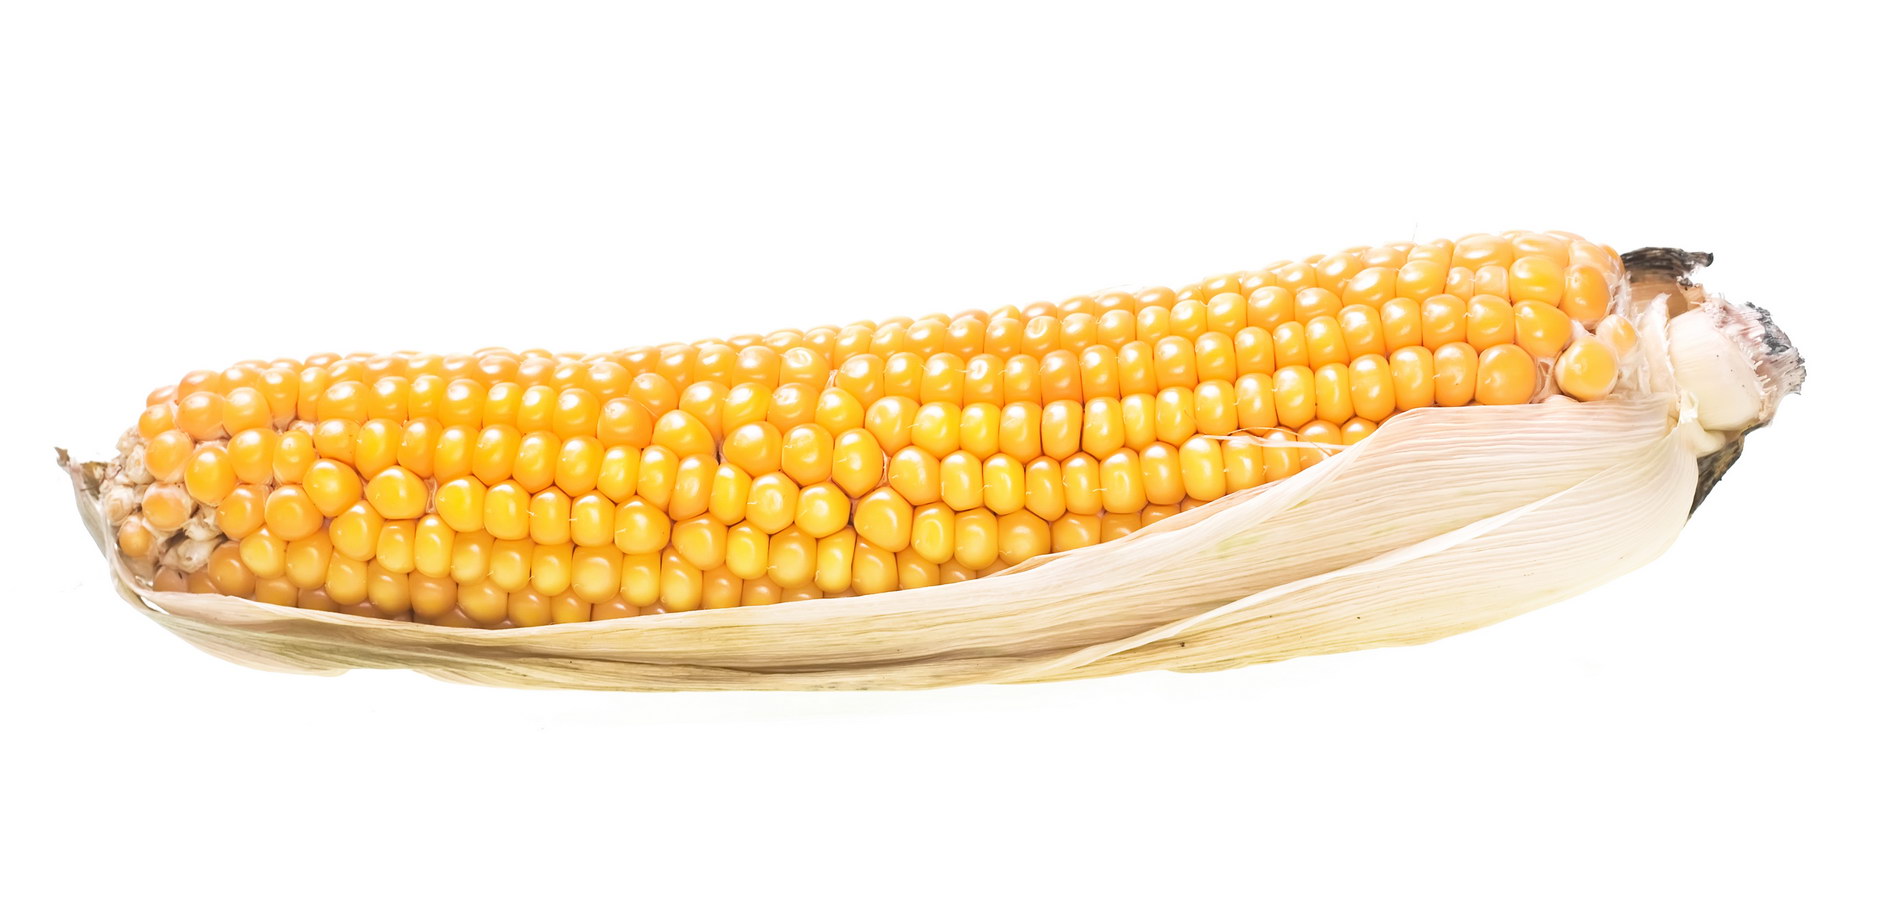 Corn photo